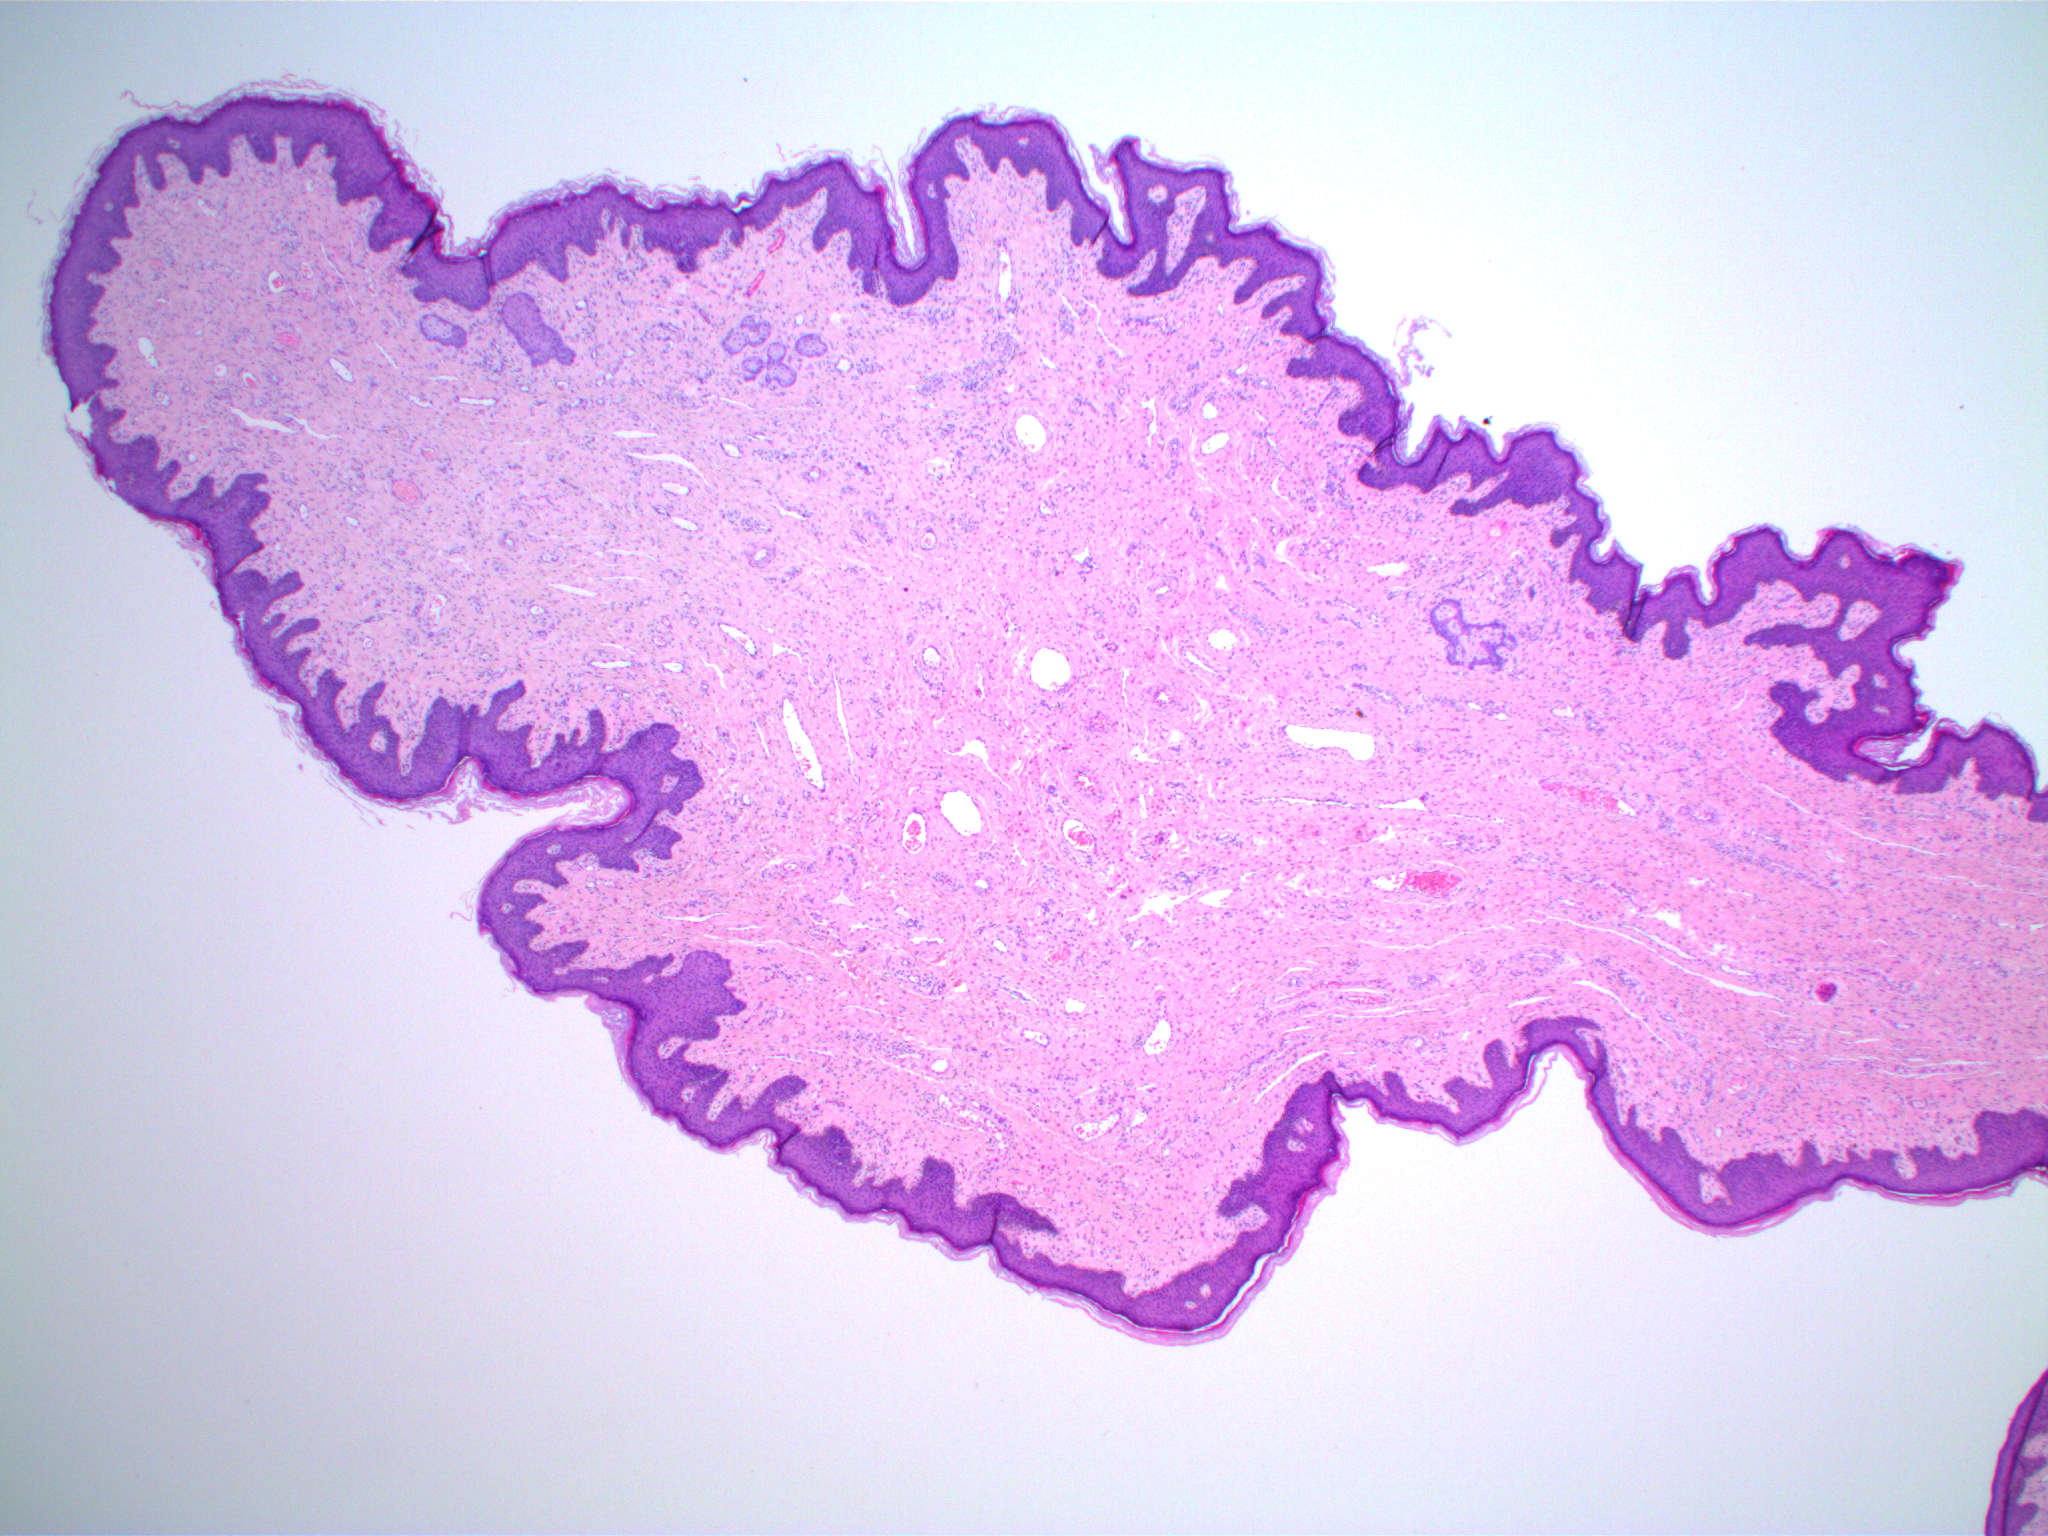 papilloma fibroepithelial)